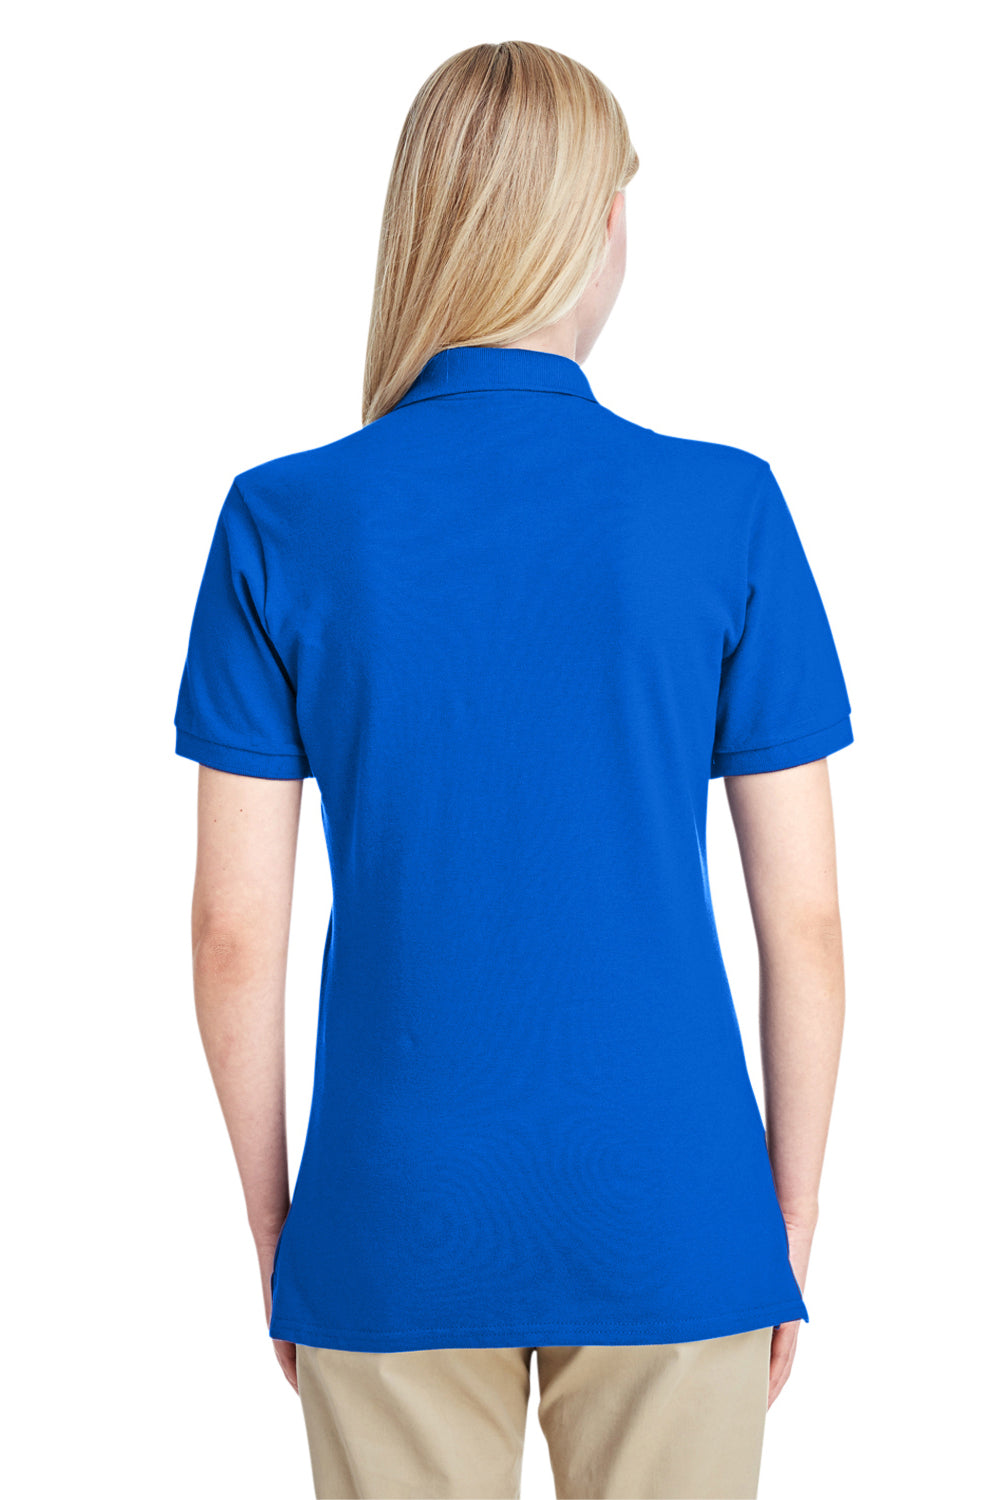 Jerzees 443WR Womens Short Sleeve Polo Shirt Royal Blue Back